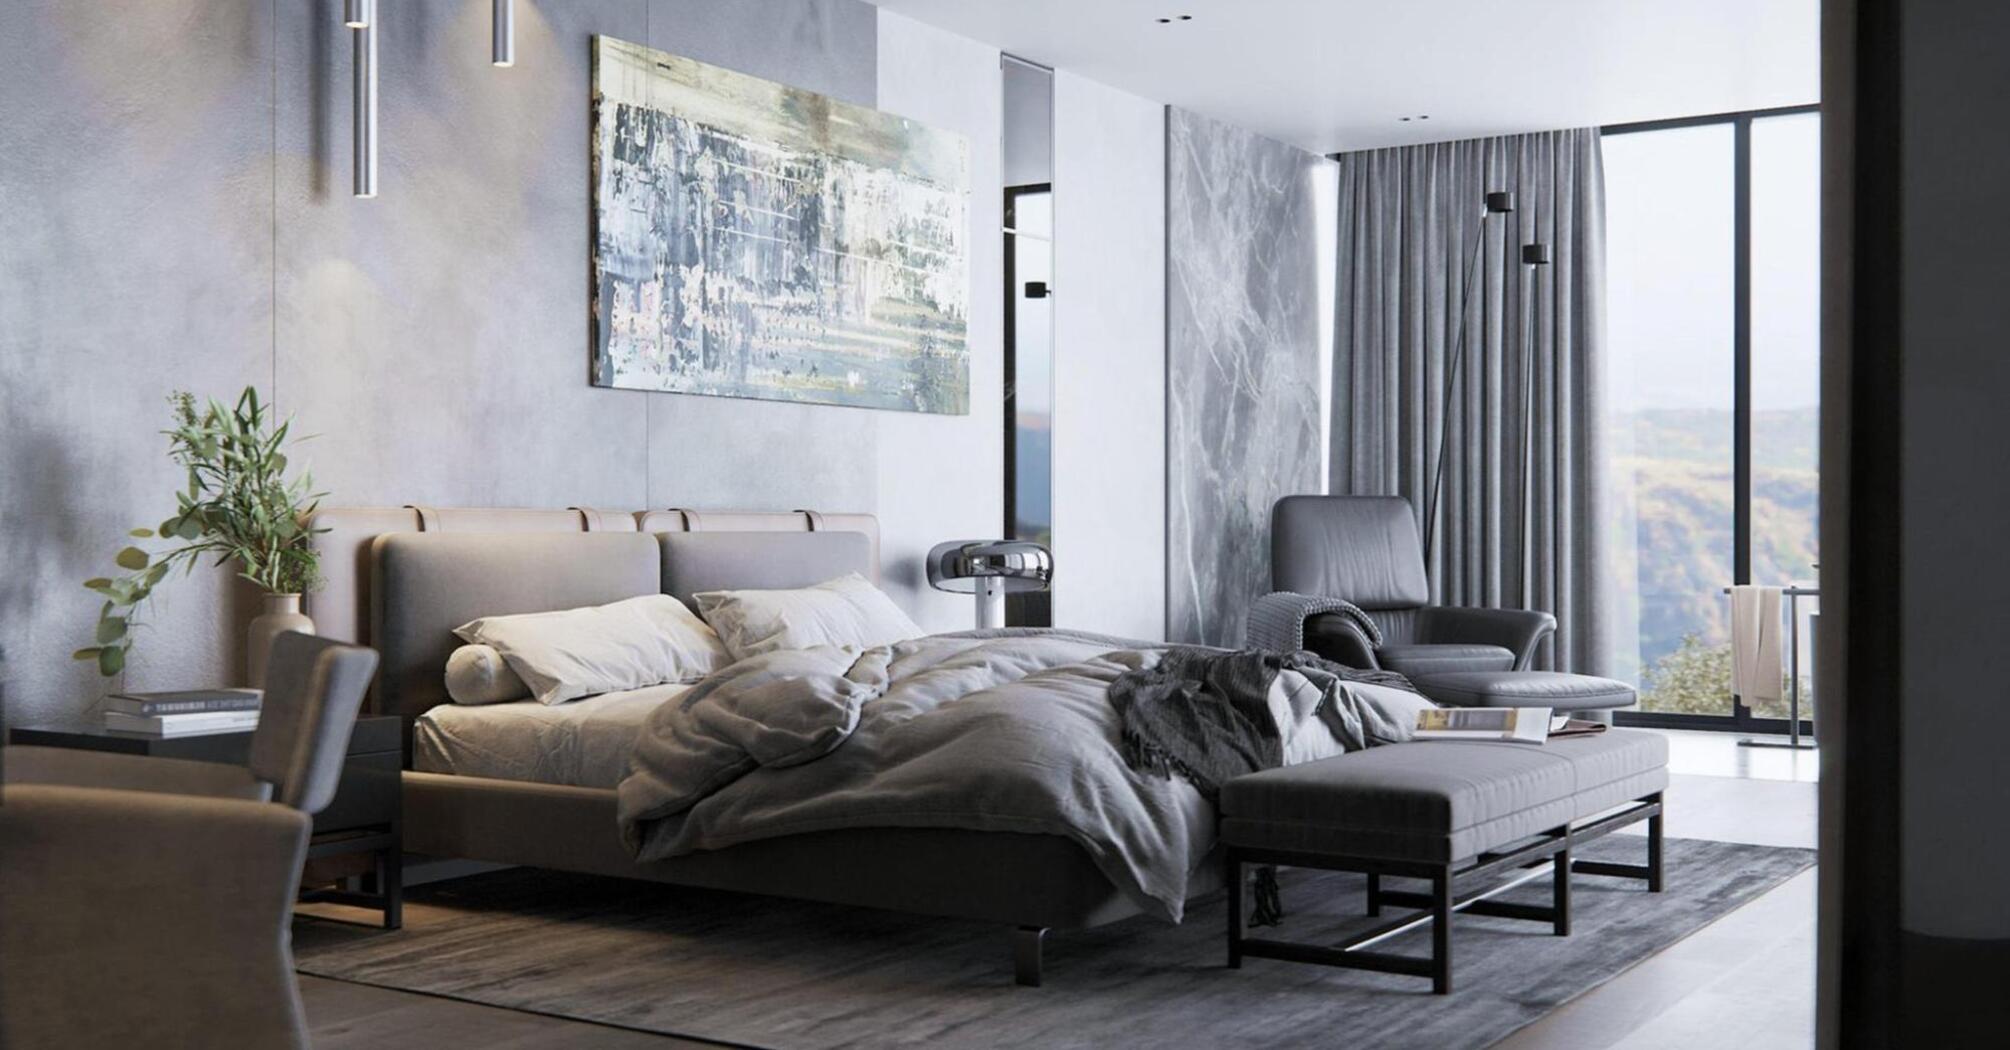 Bedroom in modern style 